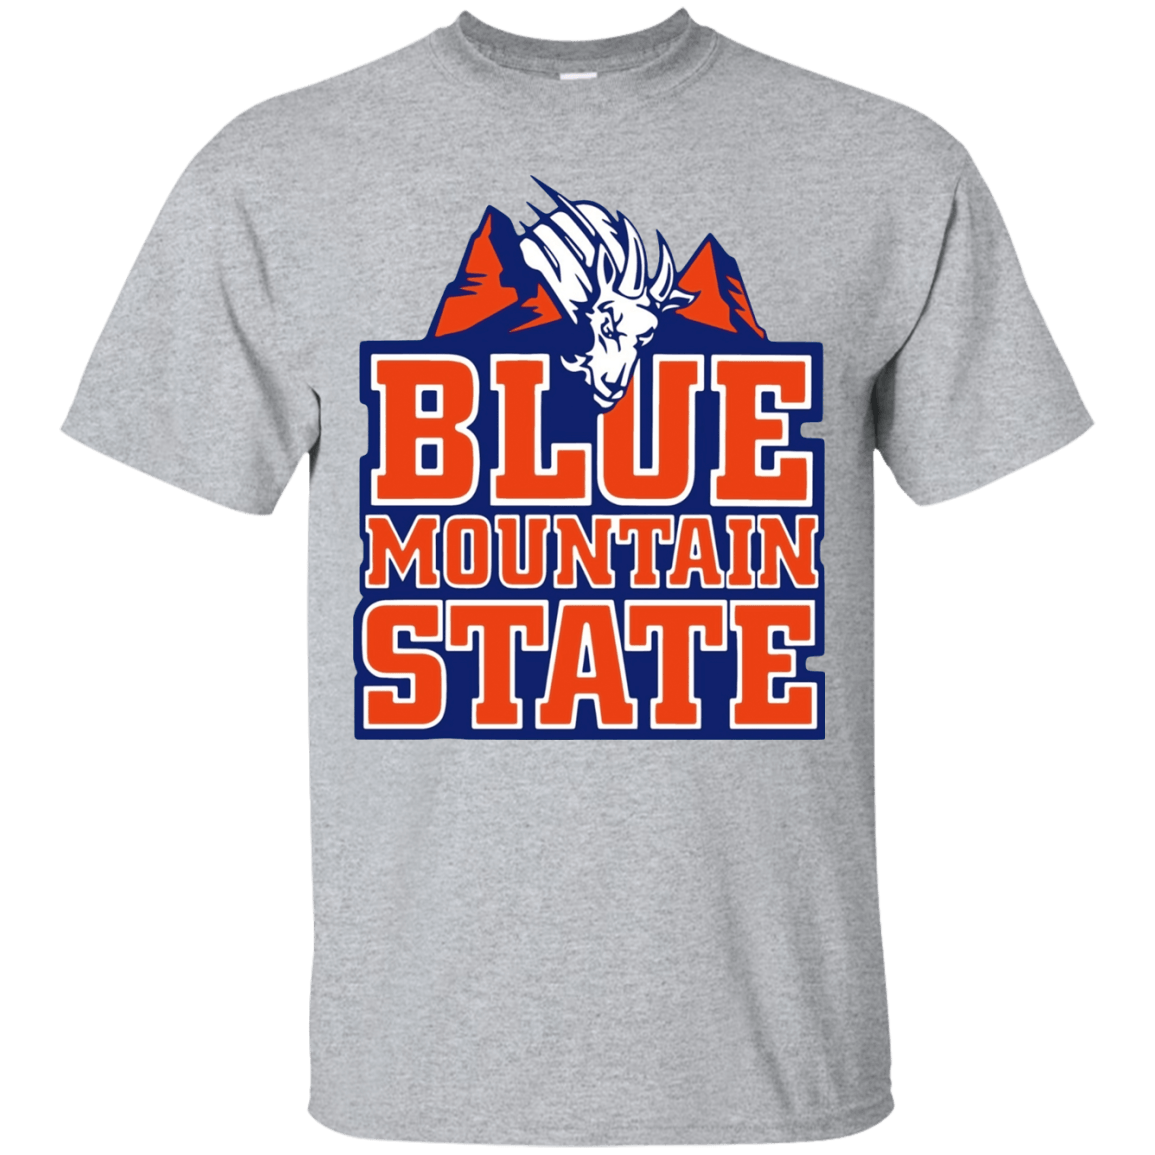 Blue Mountain State Logo - Blue Mountain State T-shirts - Goat house logo t-shirt